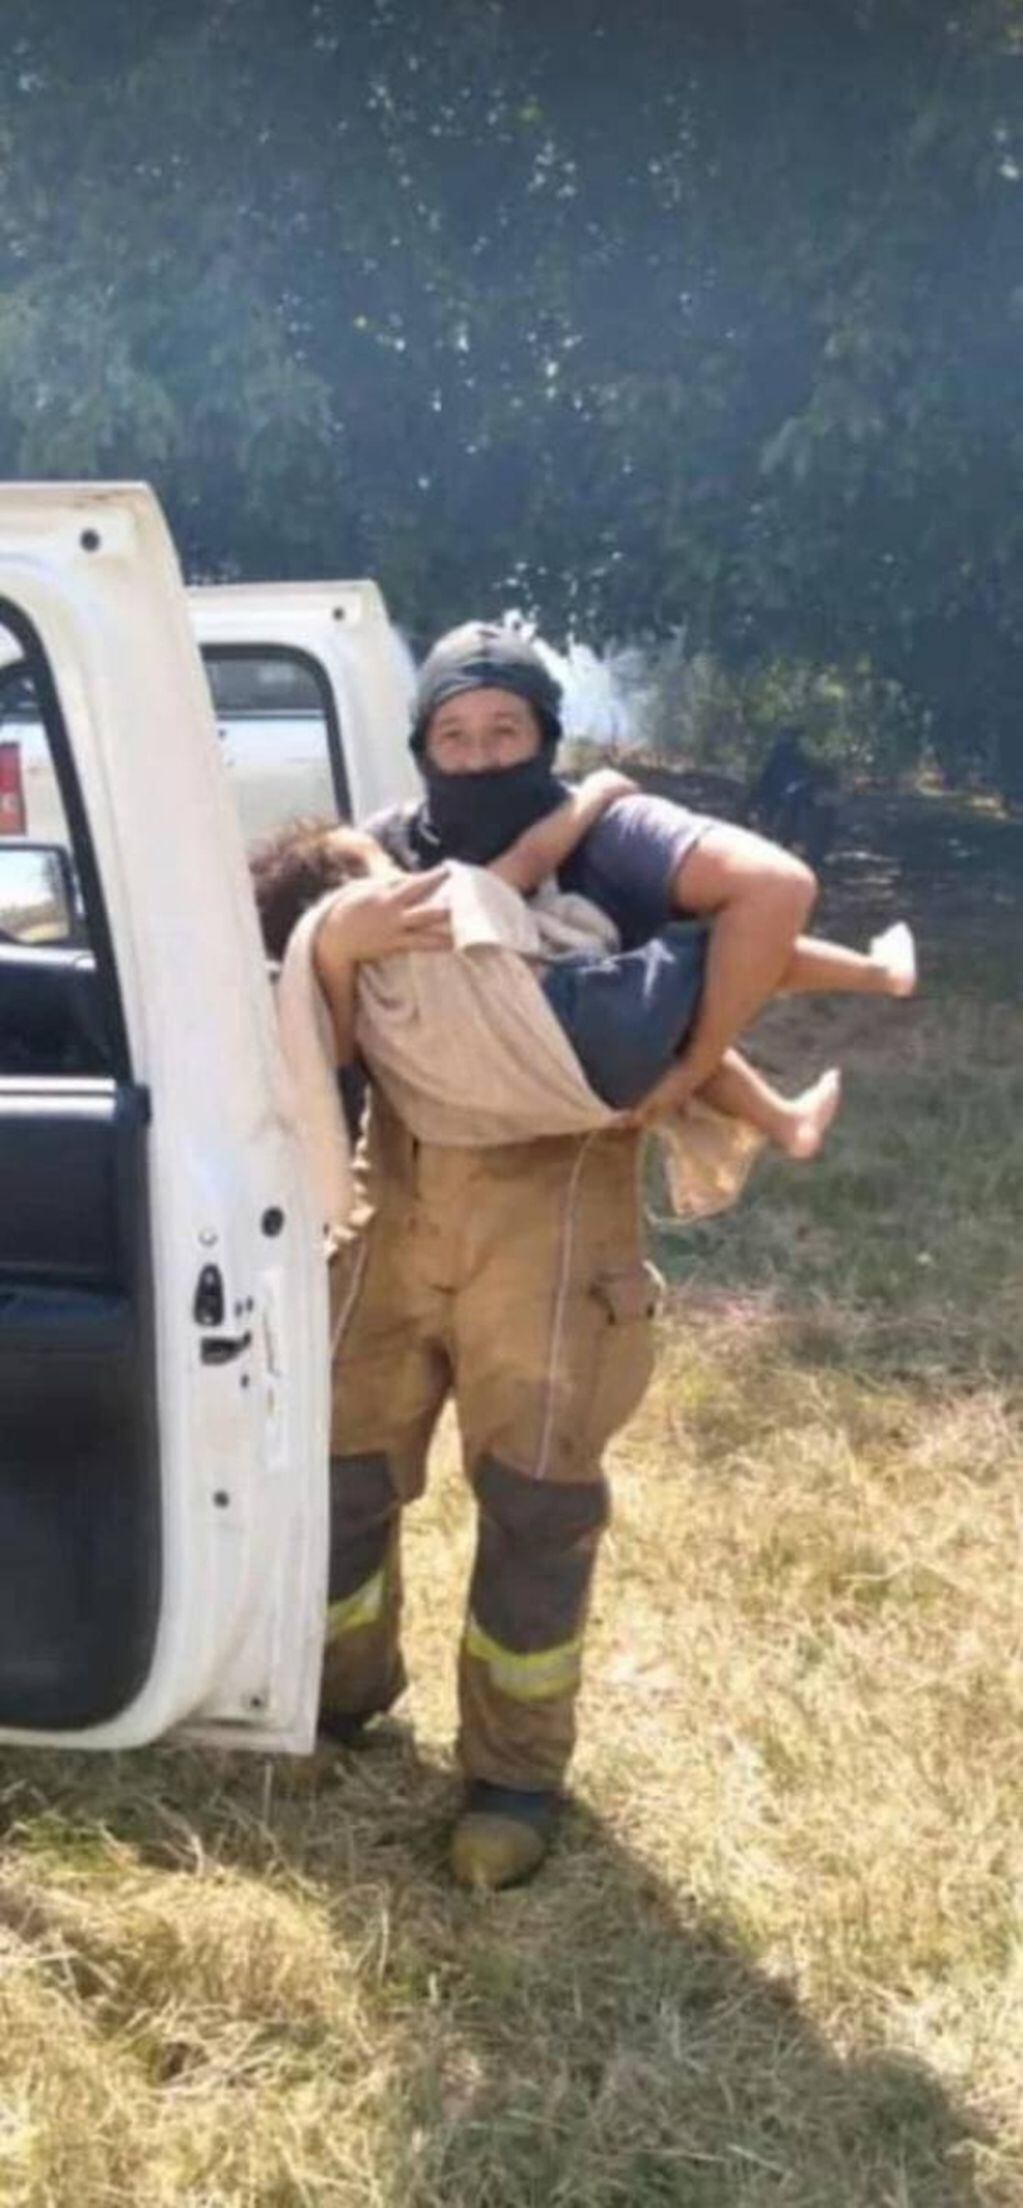 Una bombero rescató a un nene de un incendio en Lavalle y la foto se volvió viral.